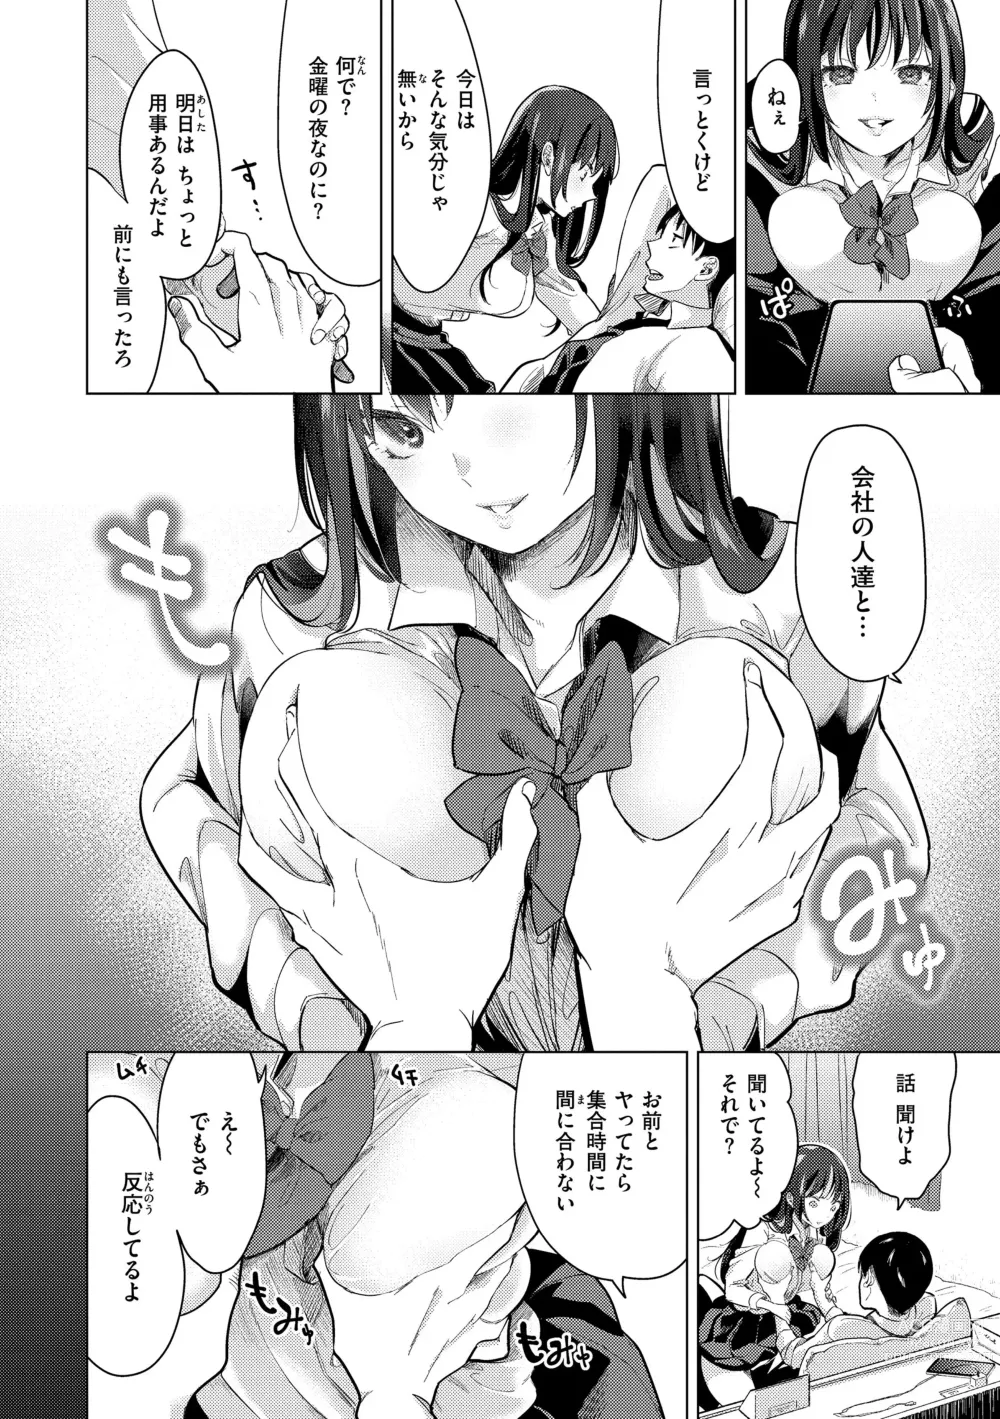 Page 6 of manga Koishite Furete - Loving and Touching